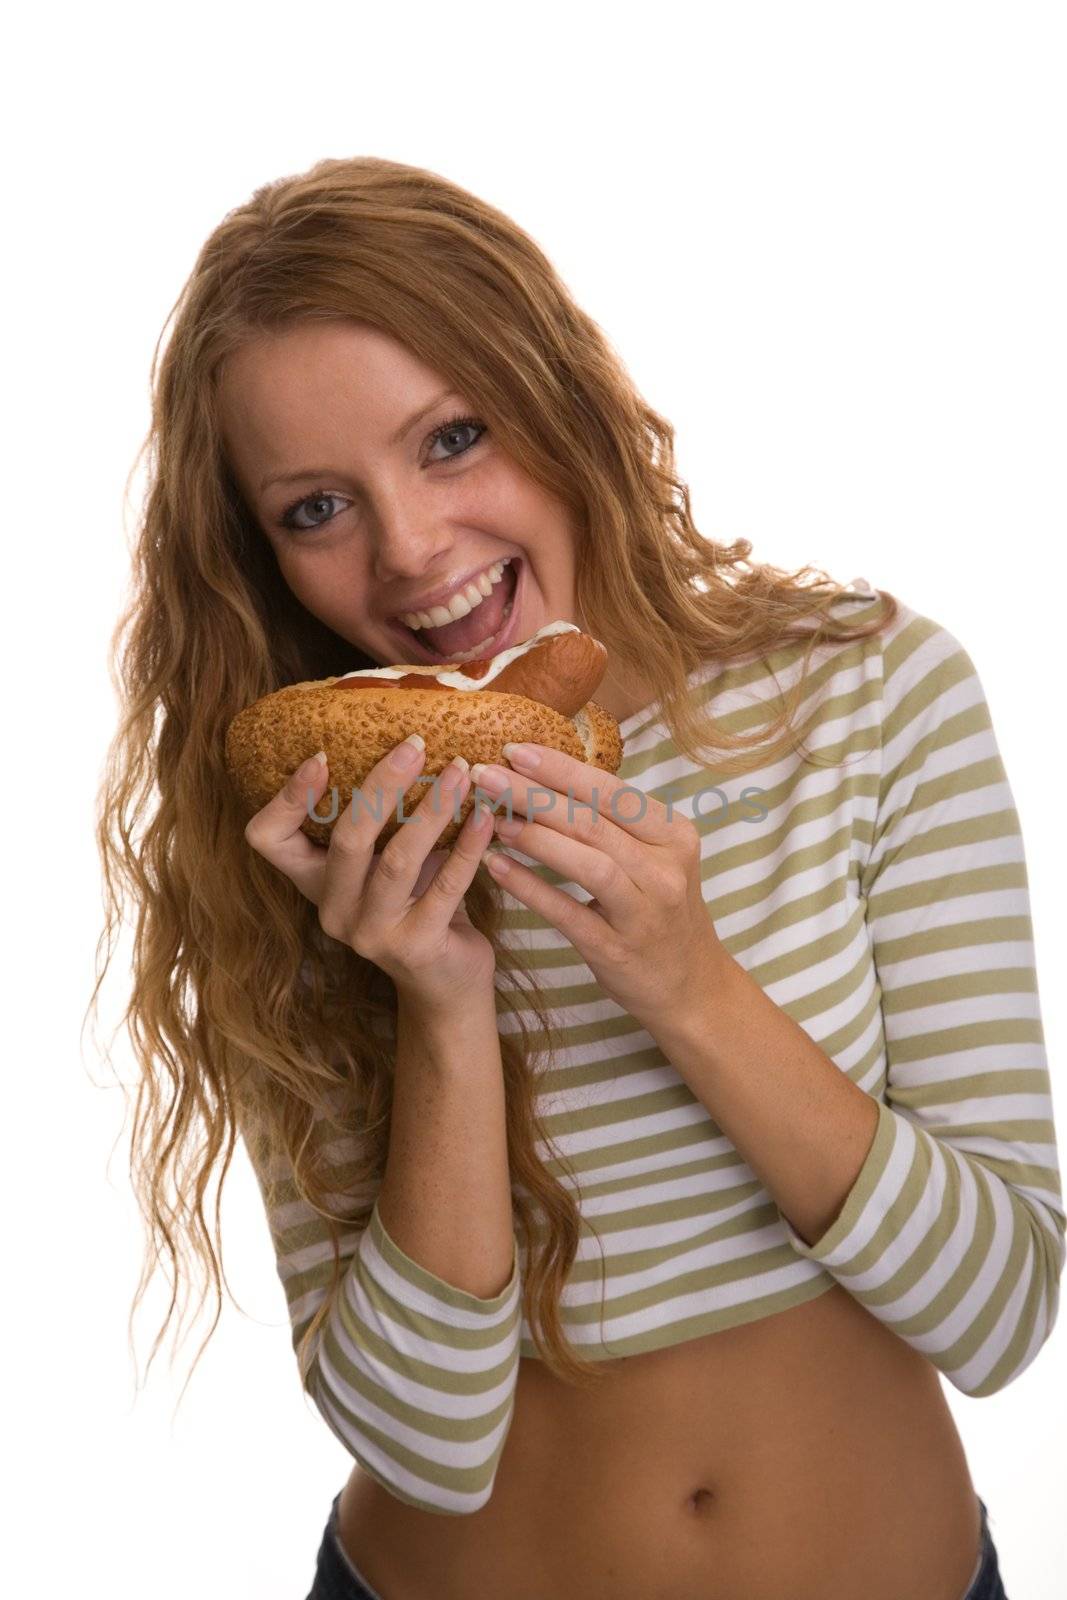 girl eating hot dog
 by skutin